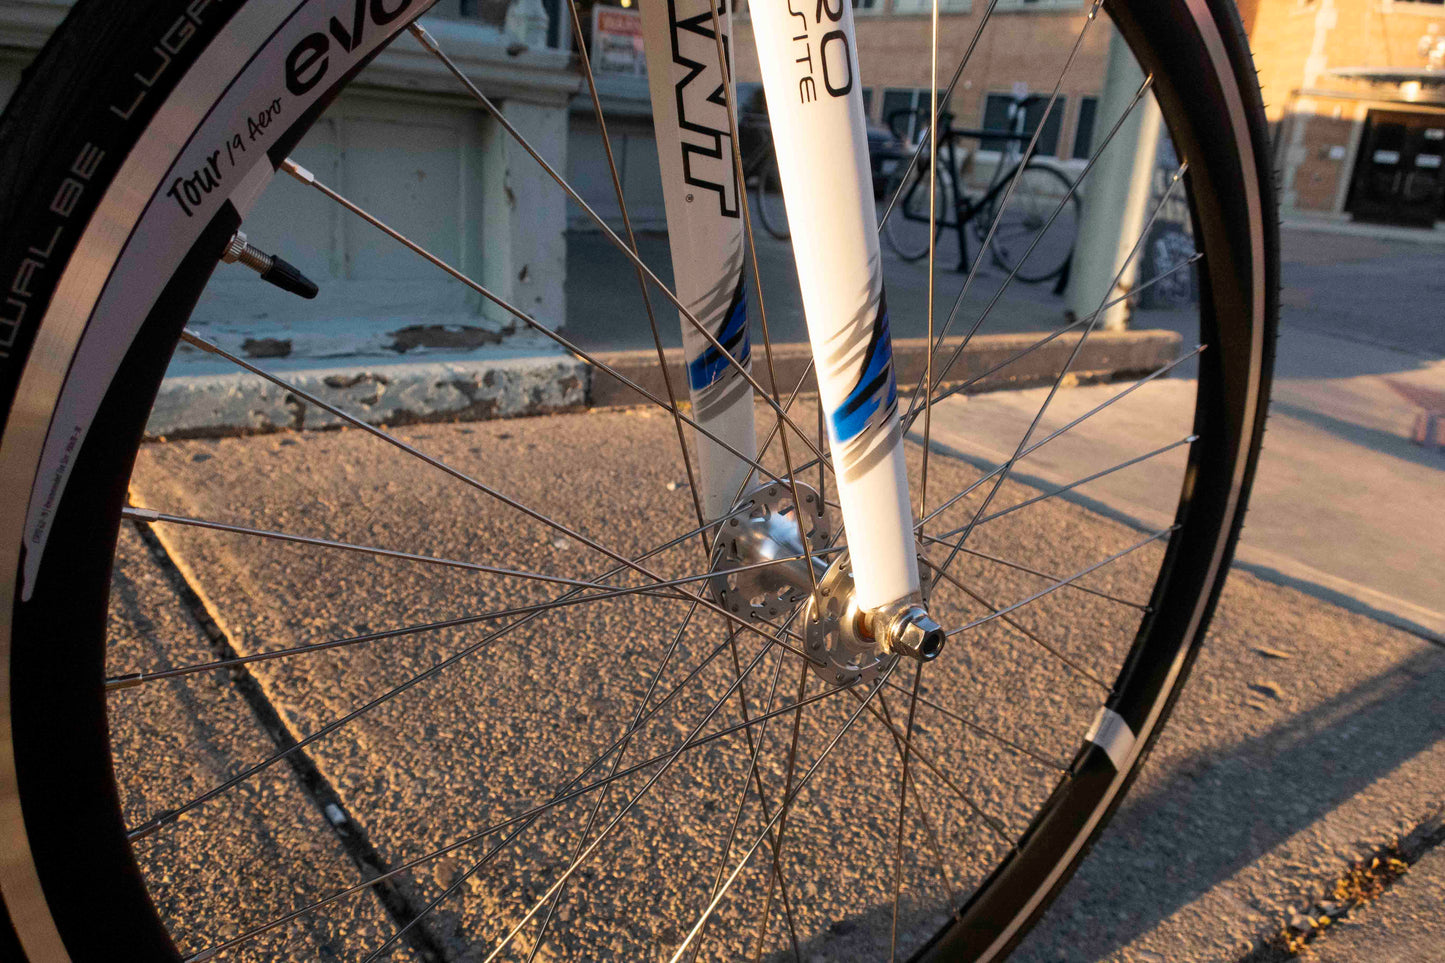 Giant Omnium TCR Track Bike/Fixed Gear